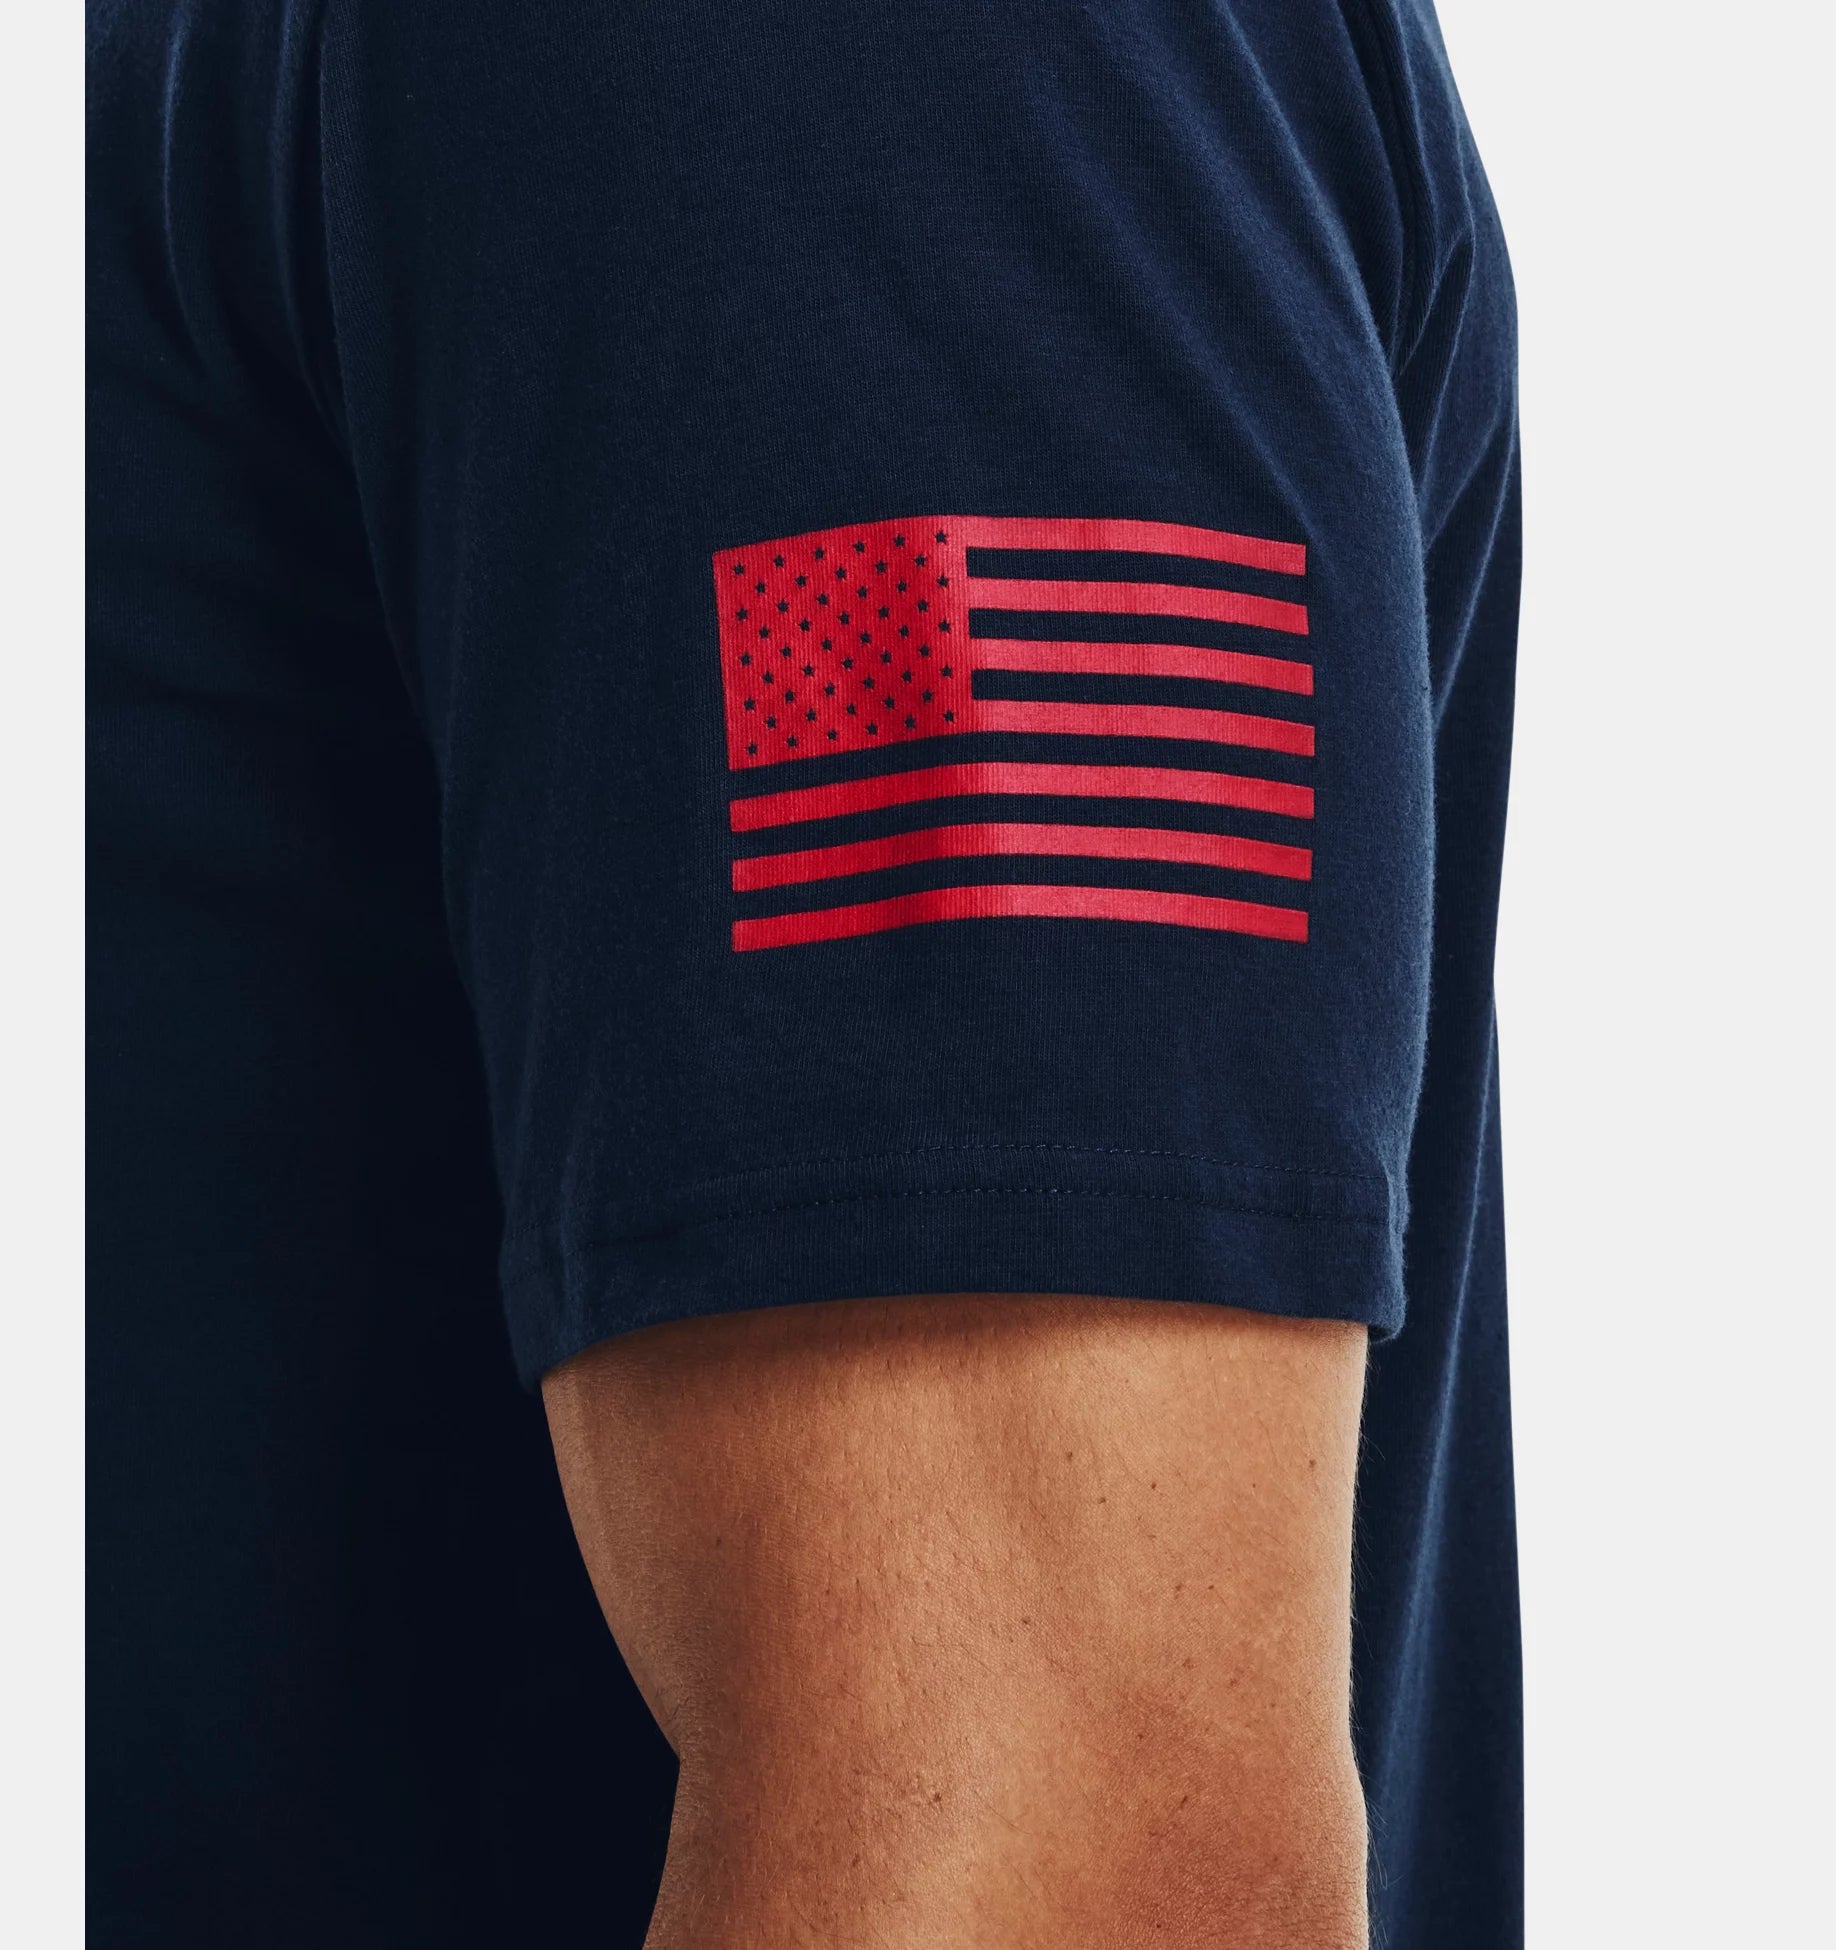 Under Armour UA Freedom USA T-Shirt 1377067 - Newest Arrivals